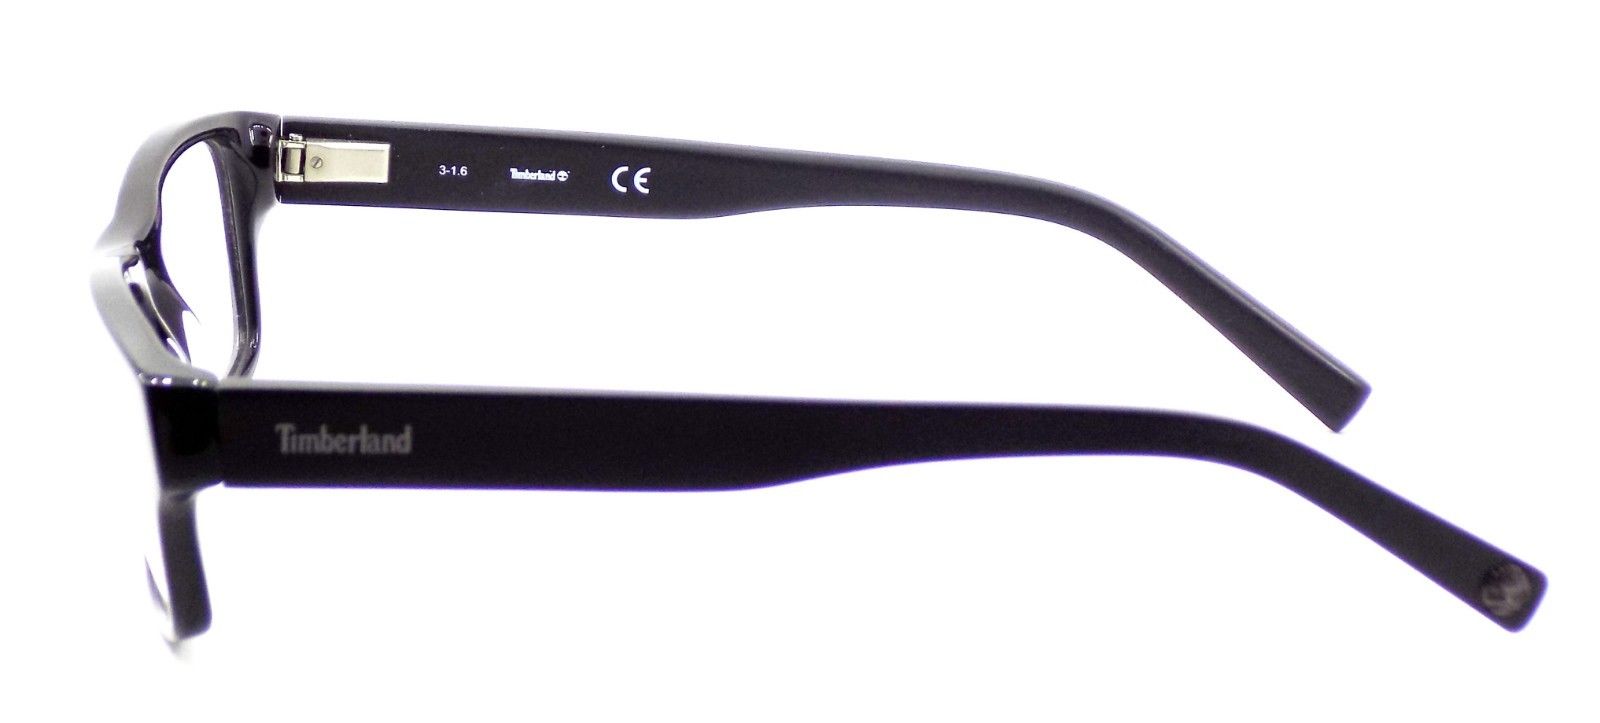 3-TIMBERLAND TB5055 001 Boys' Eyeglasses Frames SMALL 48-17-130 Shiny Black + CASE-664689642090-IKSpecs